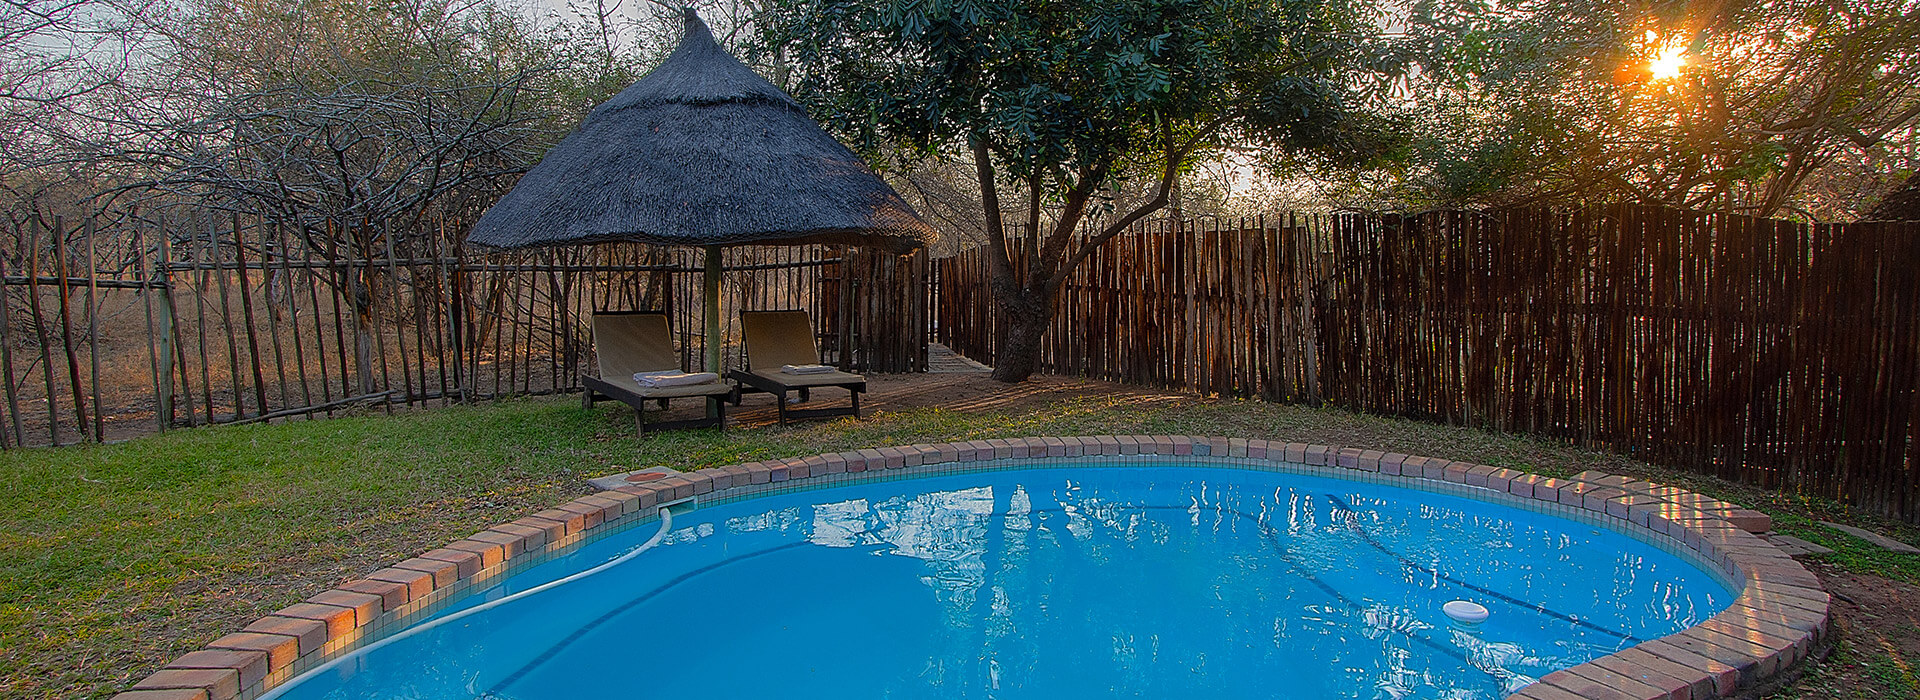 Nyati Safari Bushcamp swimming pool and lapa